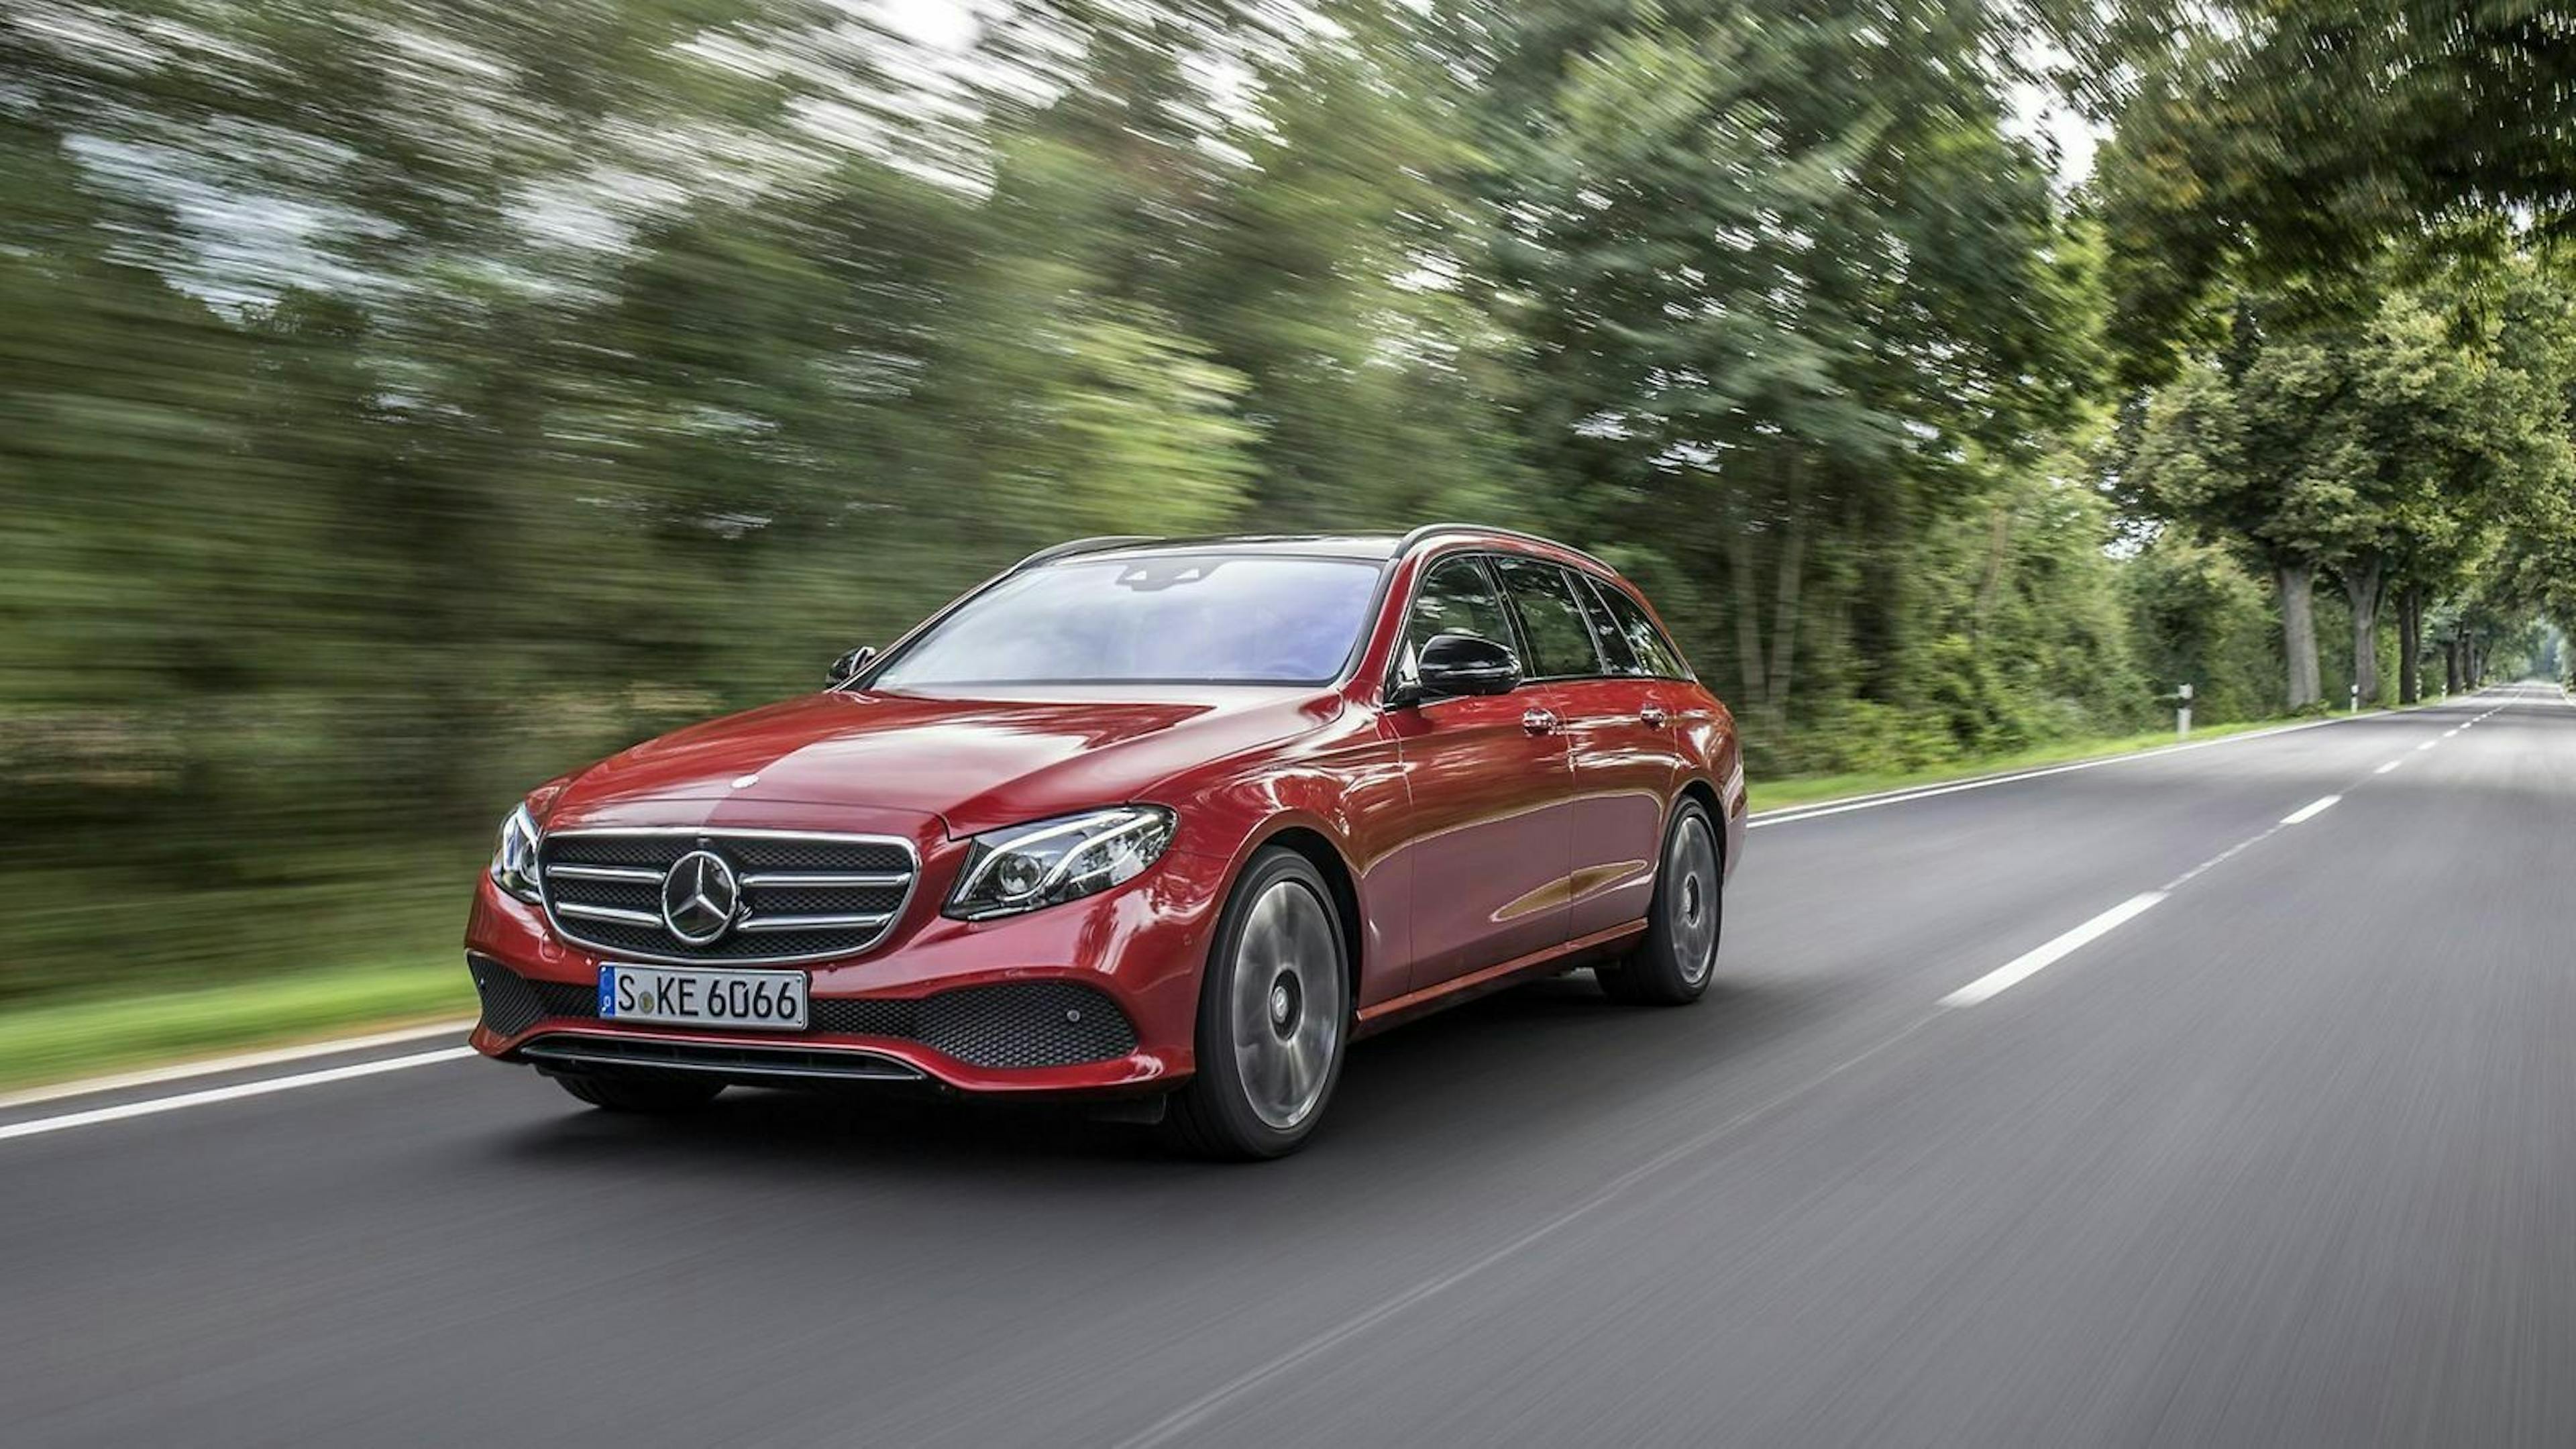 Zu sehen ist die Mercedes E-Klasse als Kombi-Modell, rot lackiert